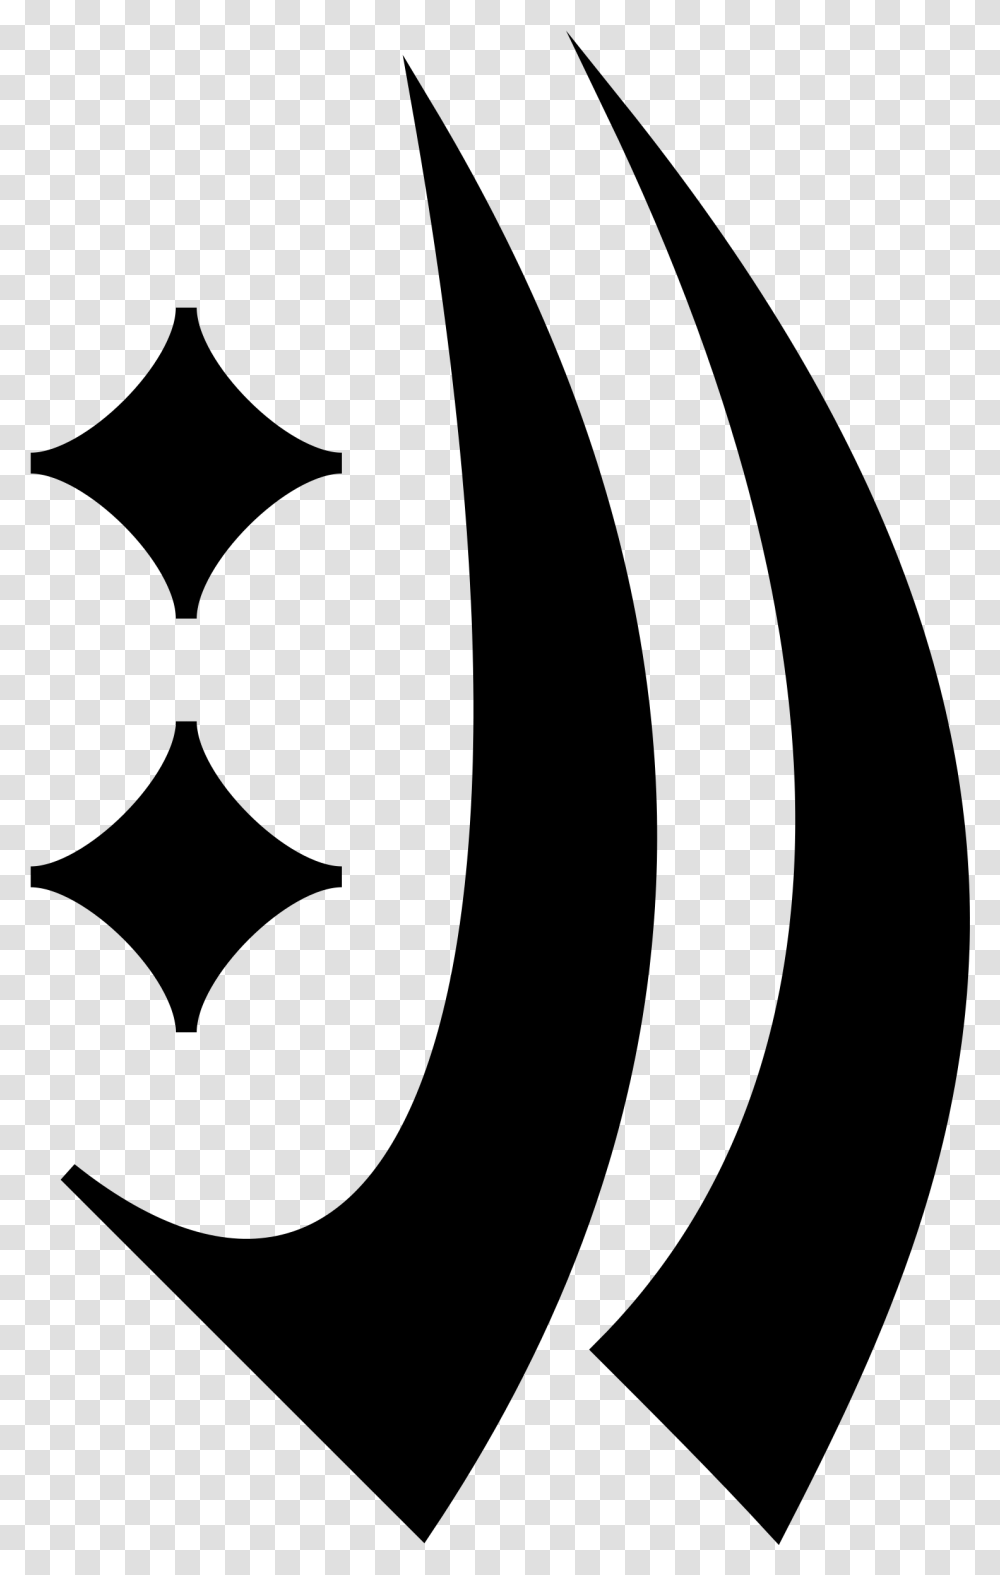 This Free Icons Design Of Wintermark Runes Empire Larp Runes, Gray, World Of Warcraft Transparent Png